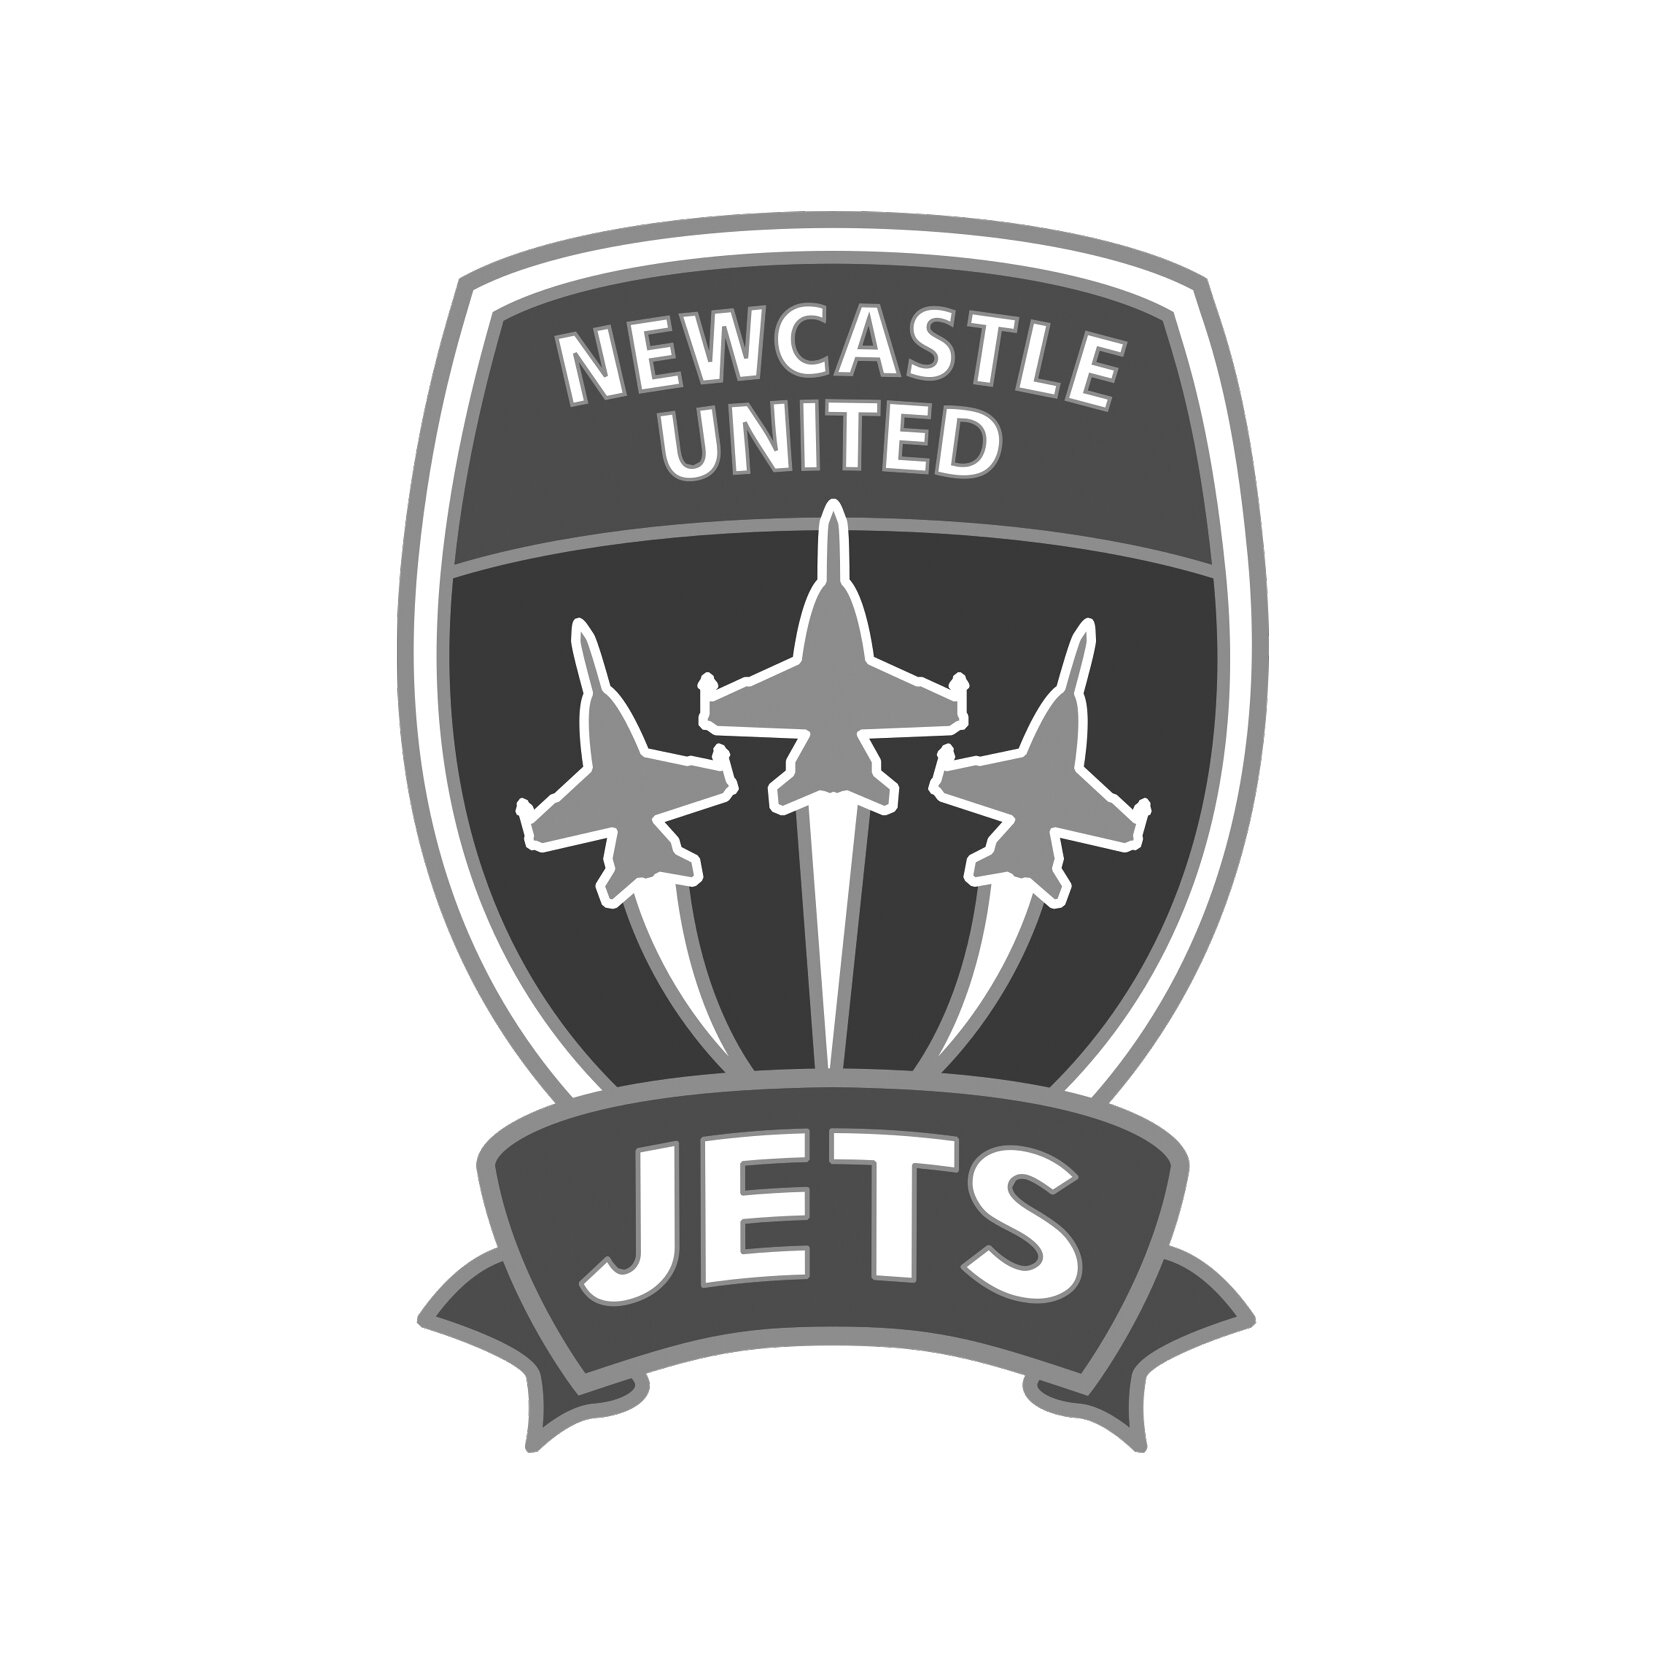 Newcastle United Jets (Copy)